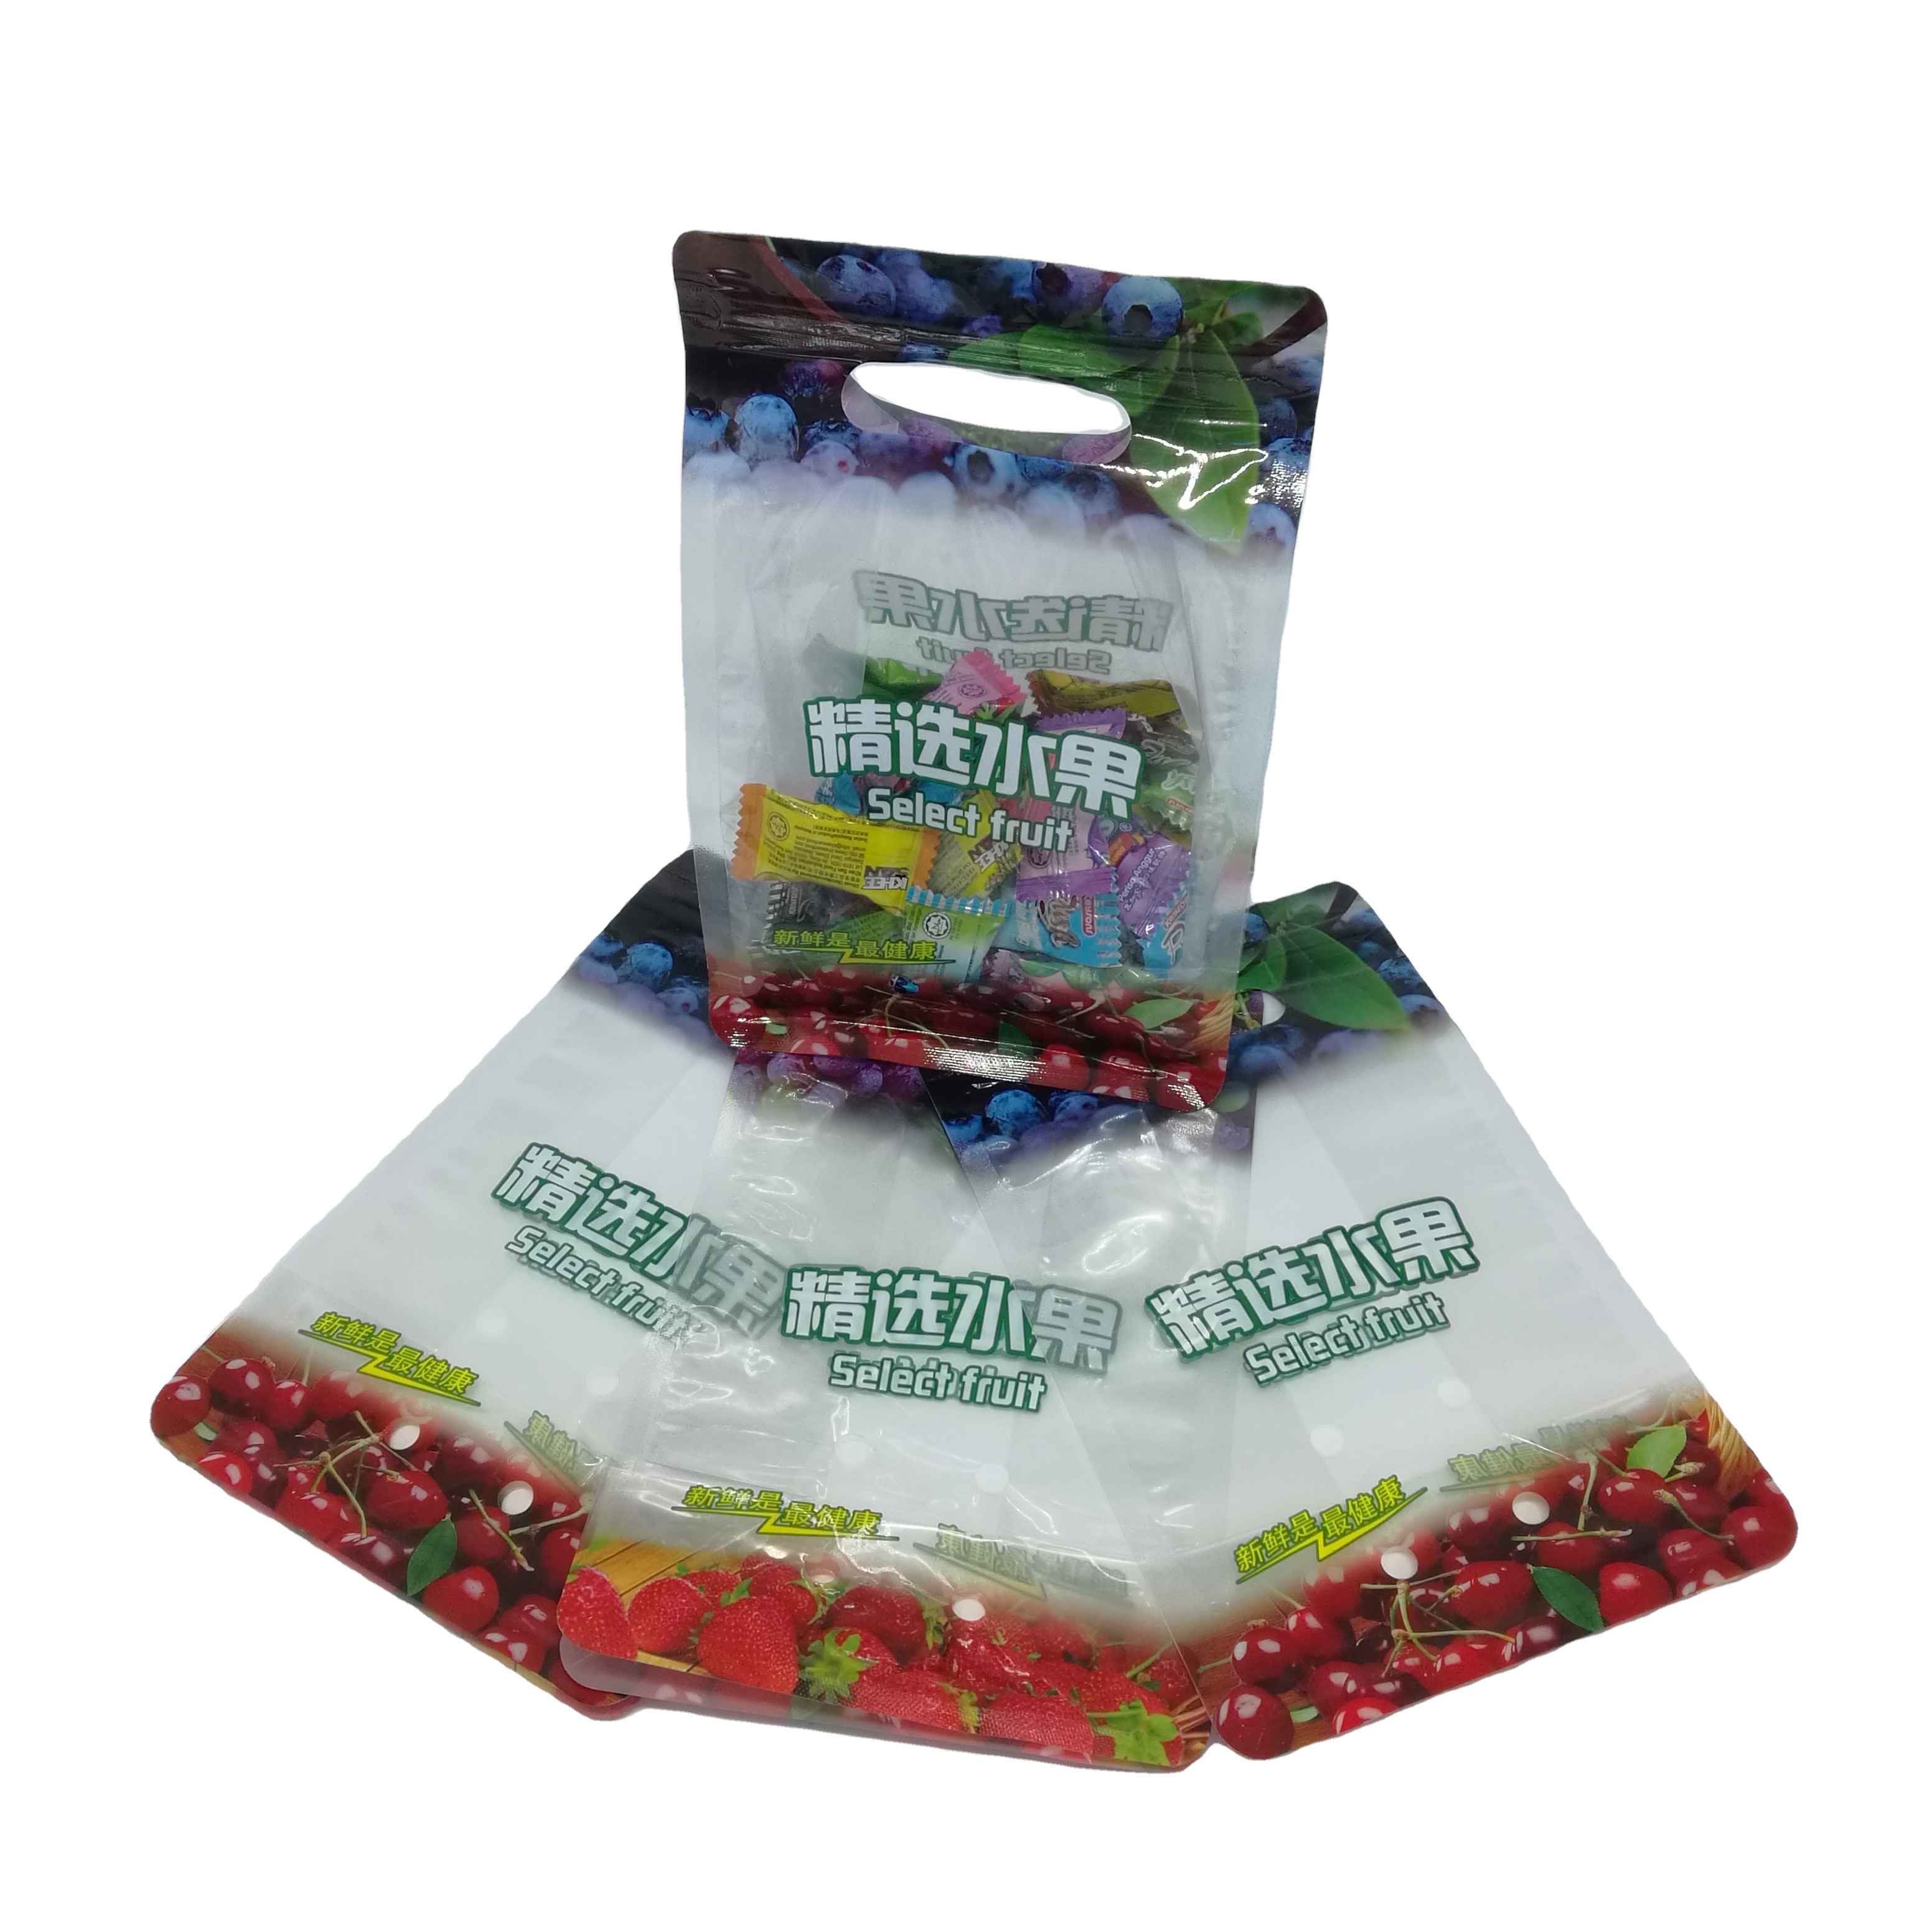 transparent fruit packaging flat bottom bag with handle holes